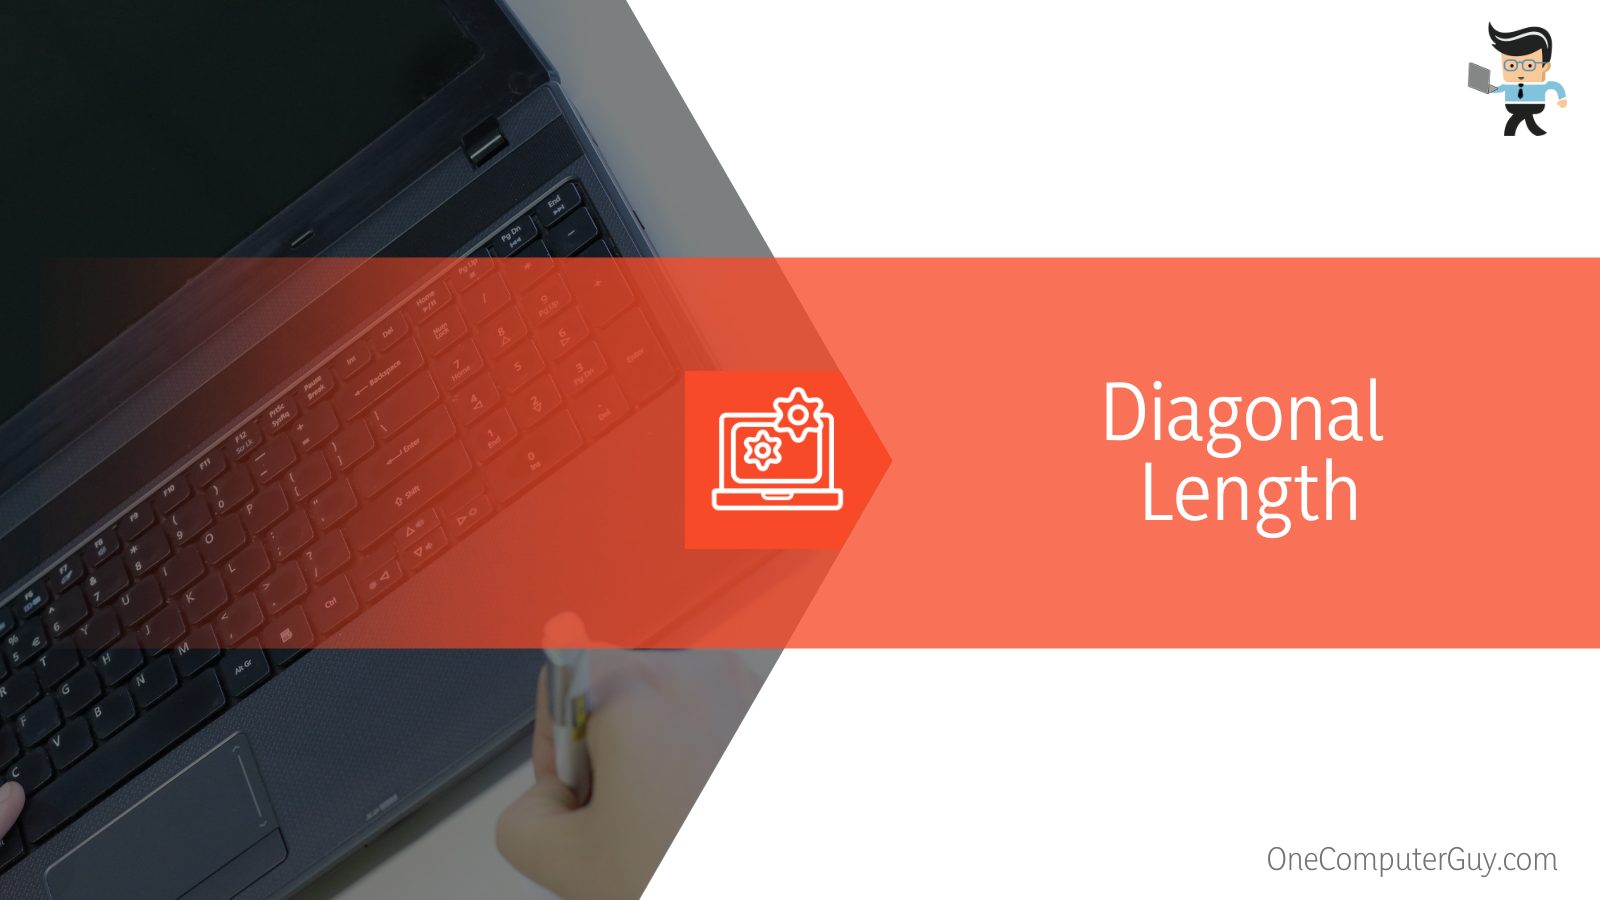 Diagonal Length for Sizing Laptops